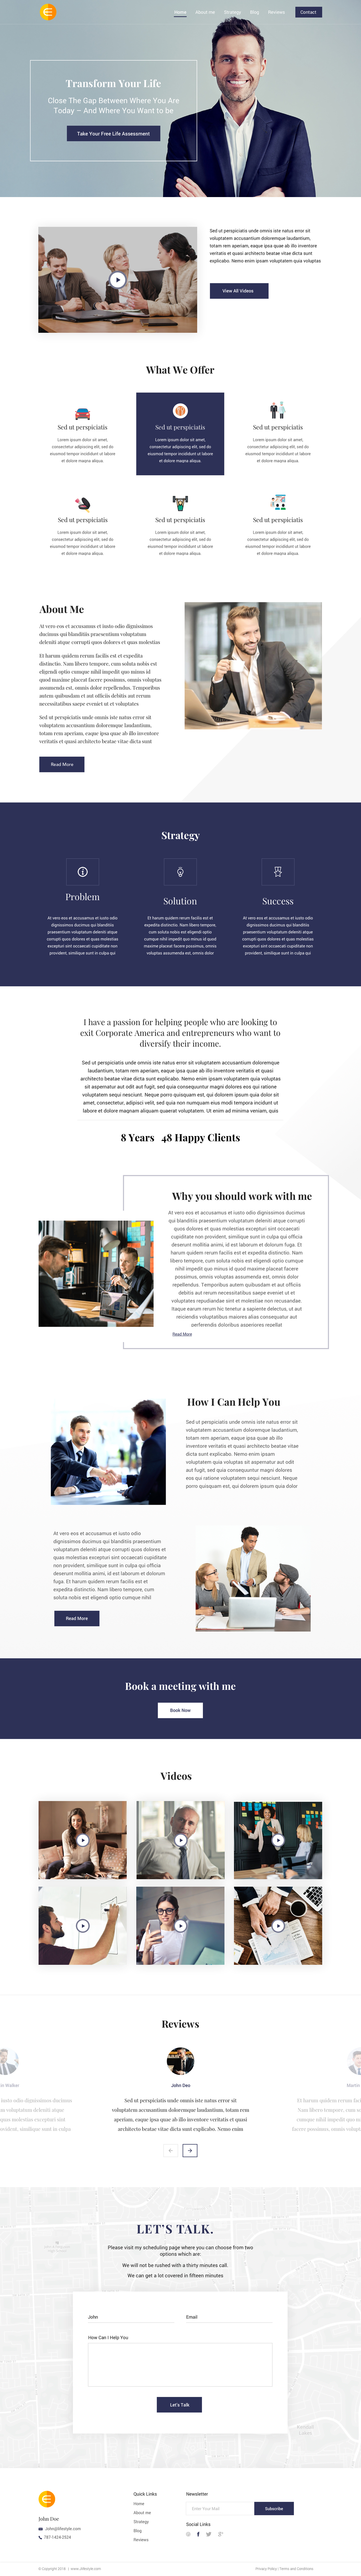 Motivational Speaker Website Design Example #2